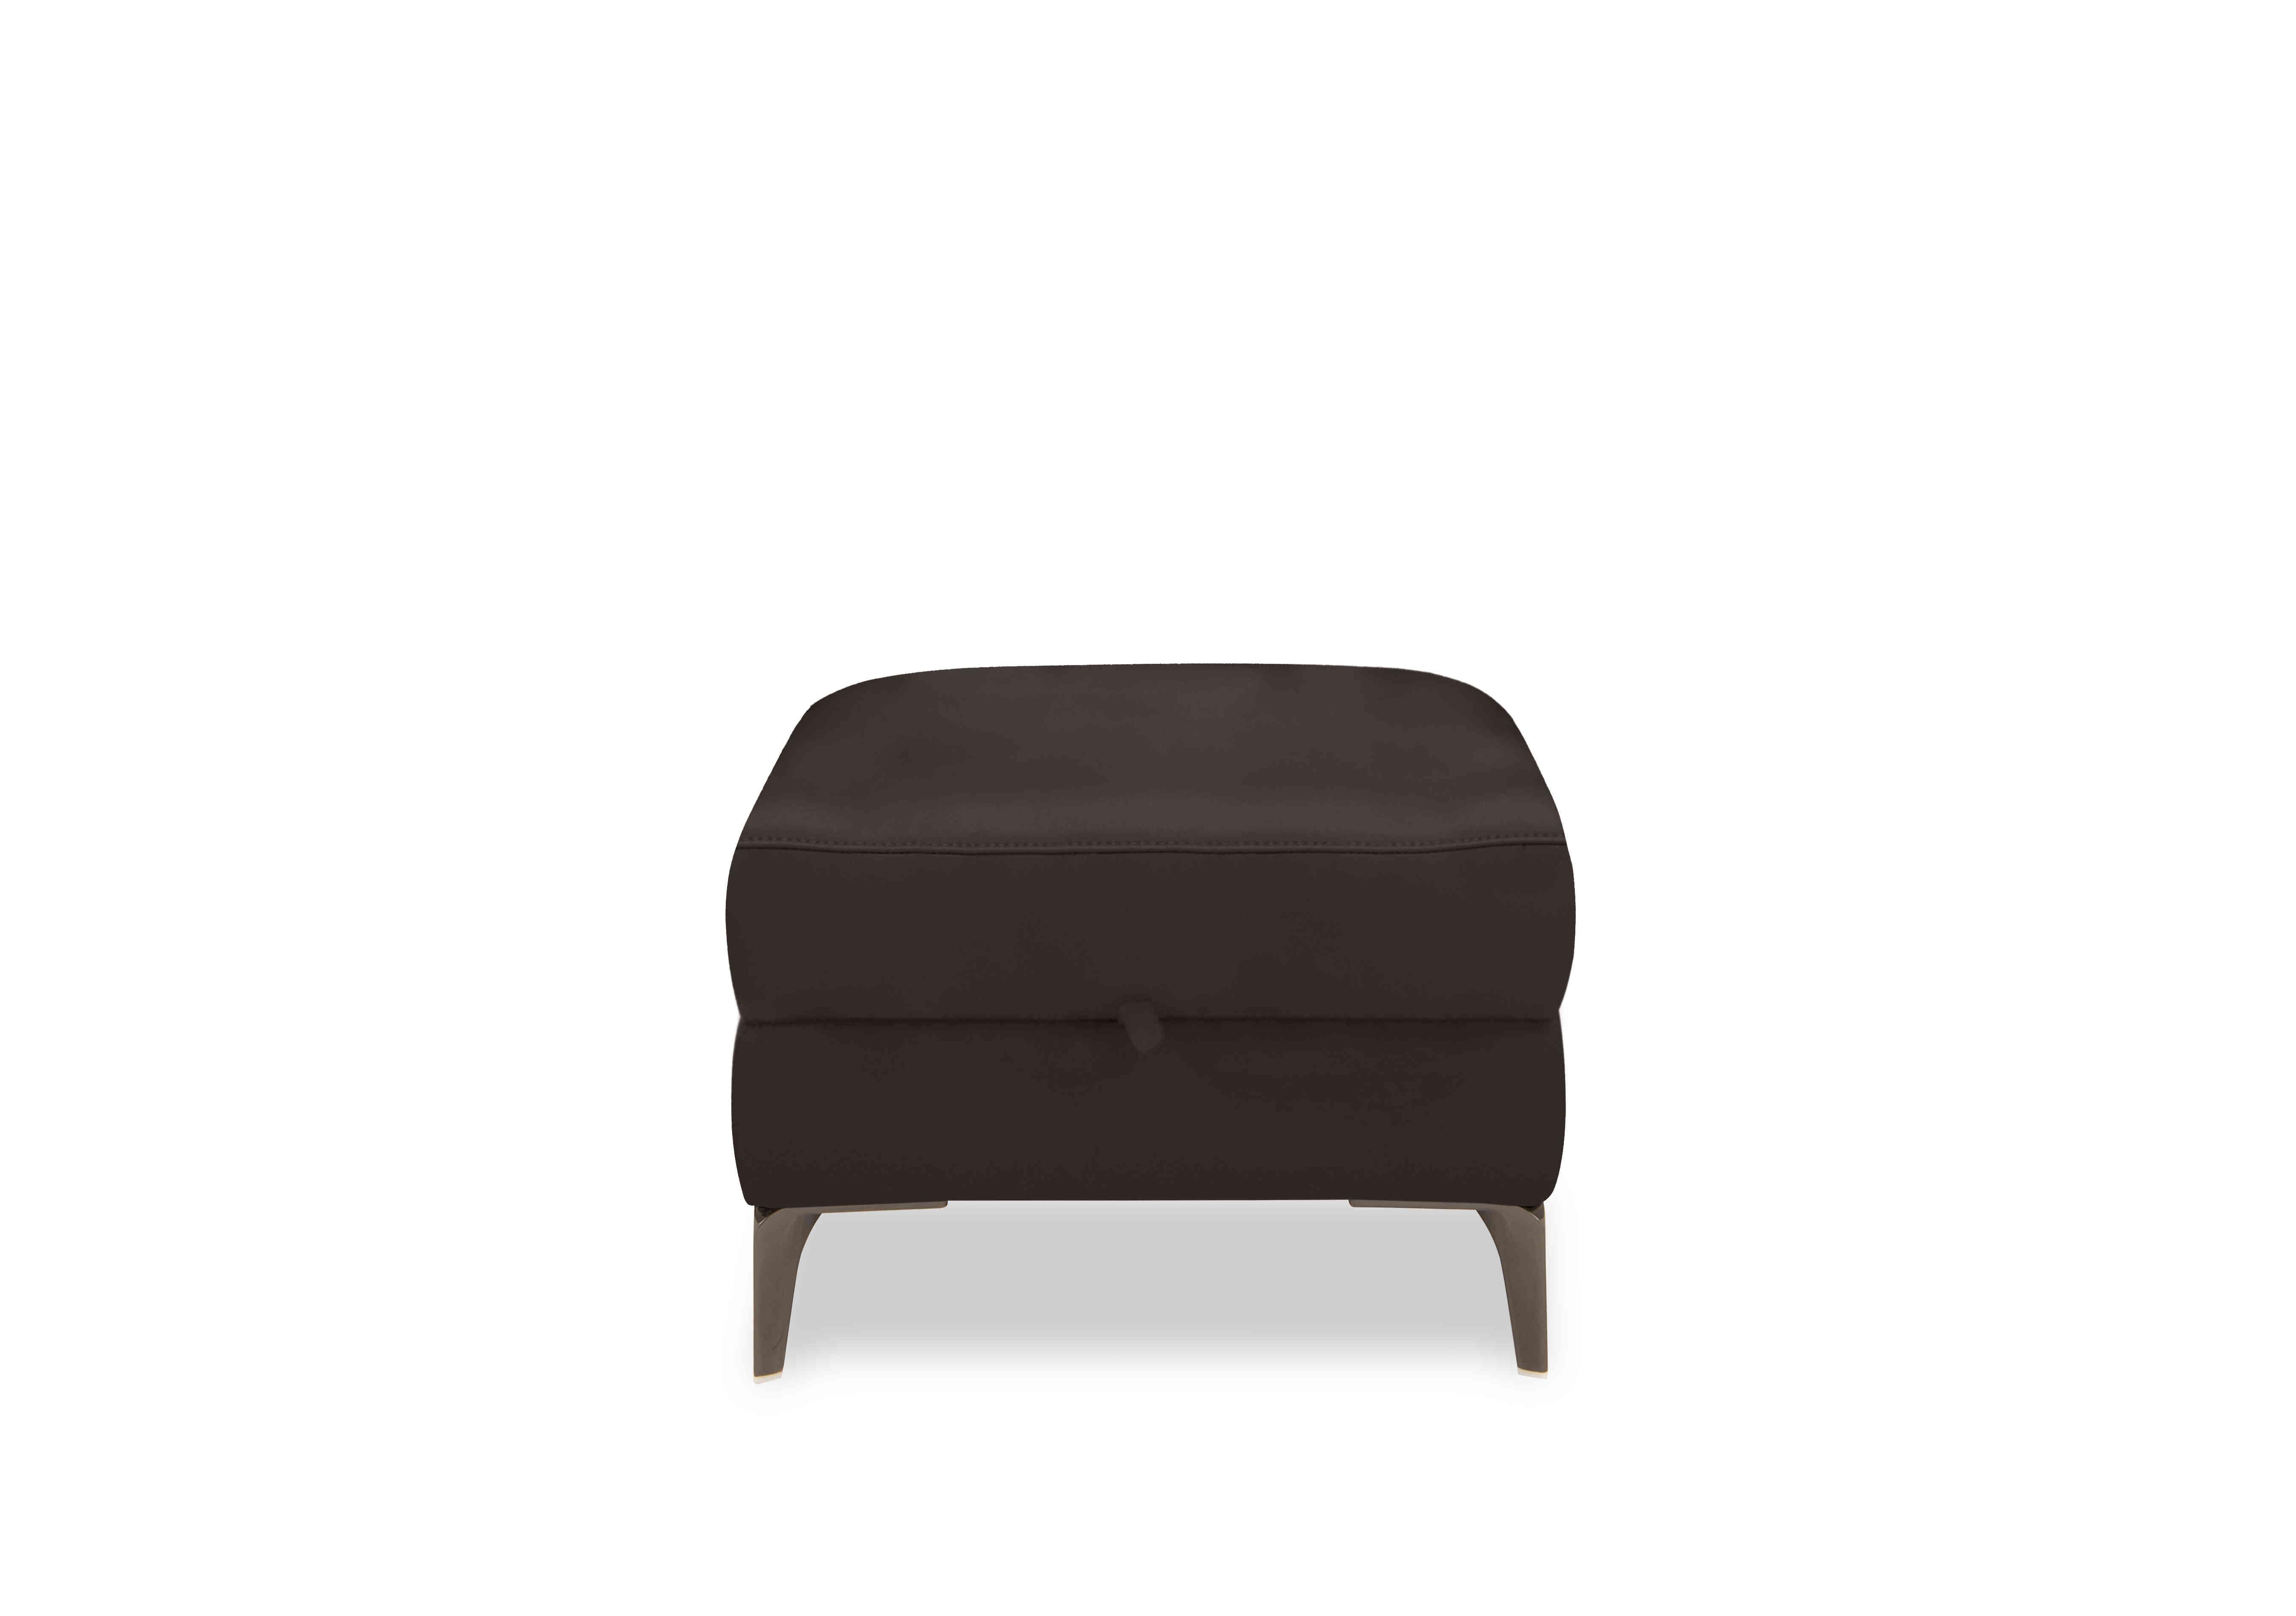 New York Leather Storage Footstool in Bv-1748 Dark Chocolate on Furniture Village